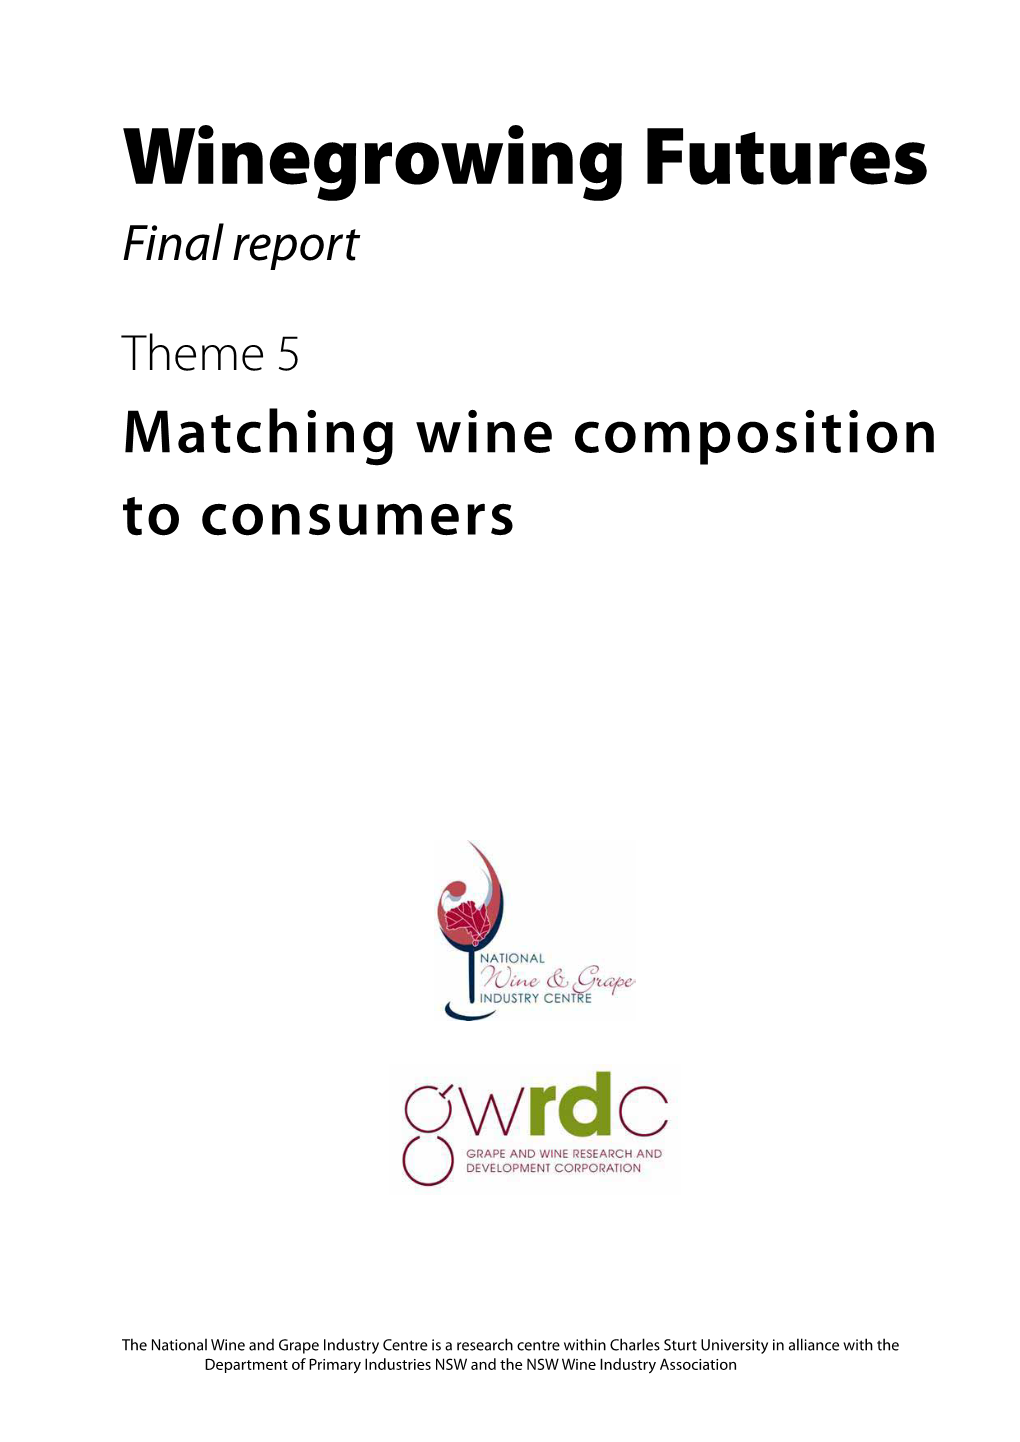 Winegrowing Futures Final Report